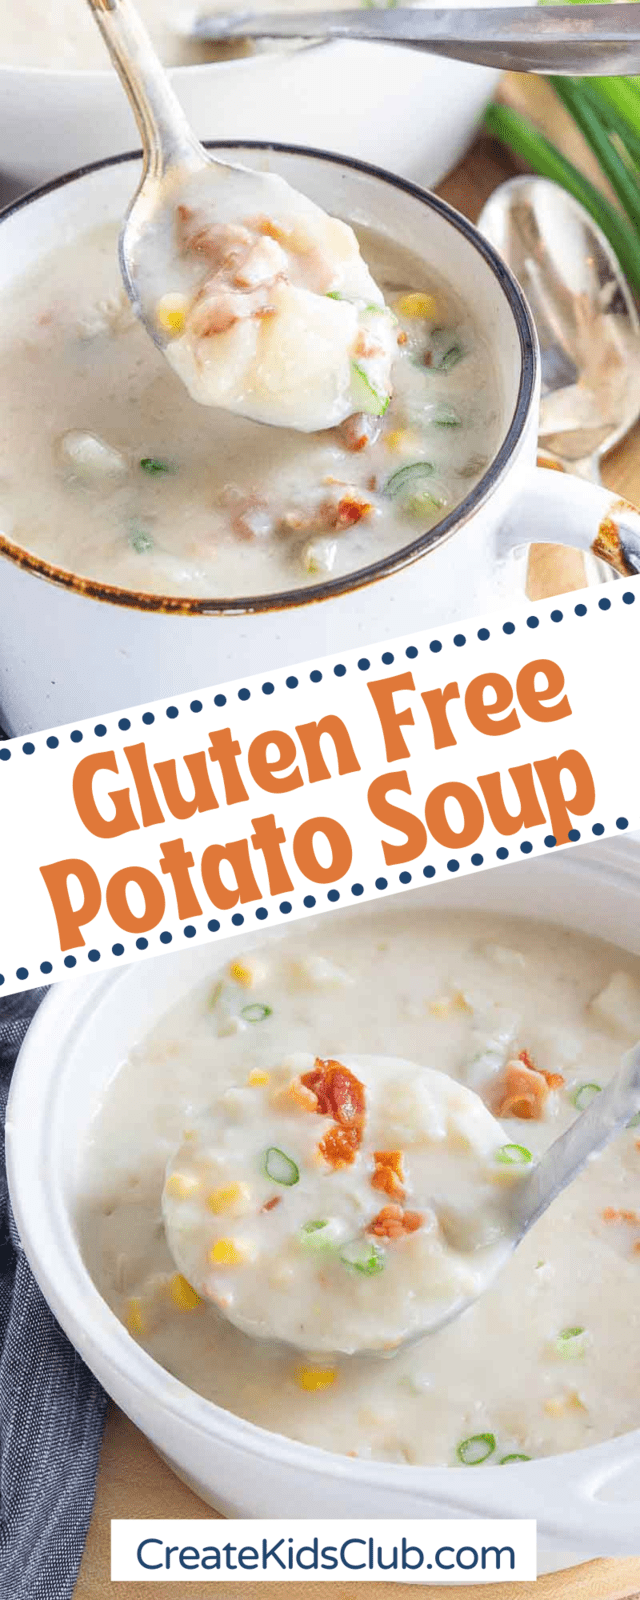 two Pinterest images of gluten free potato soup